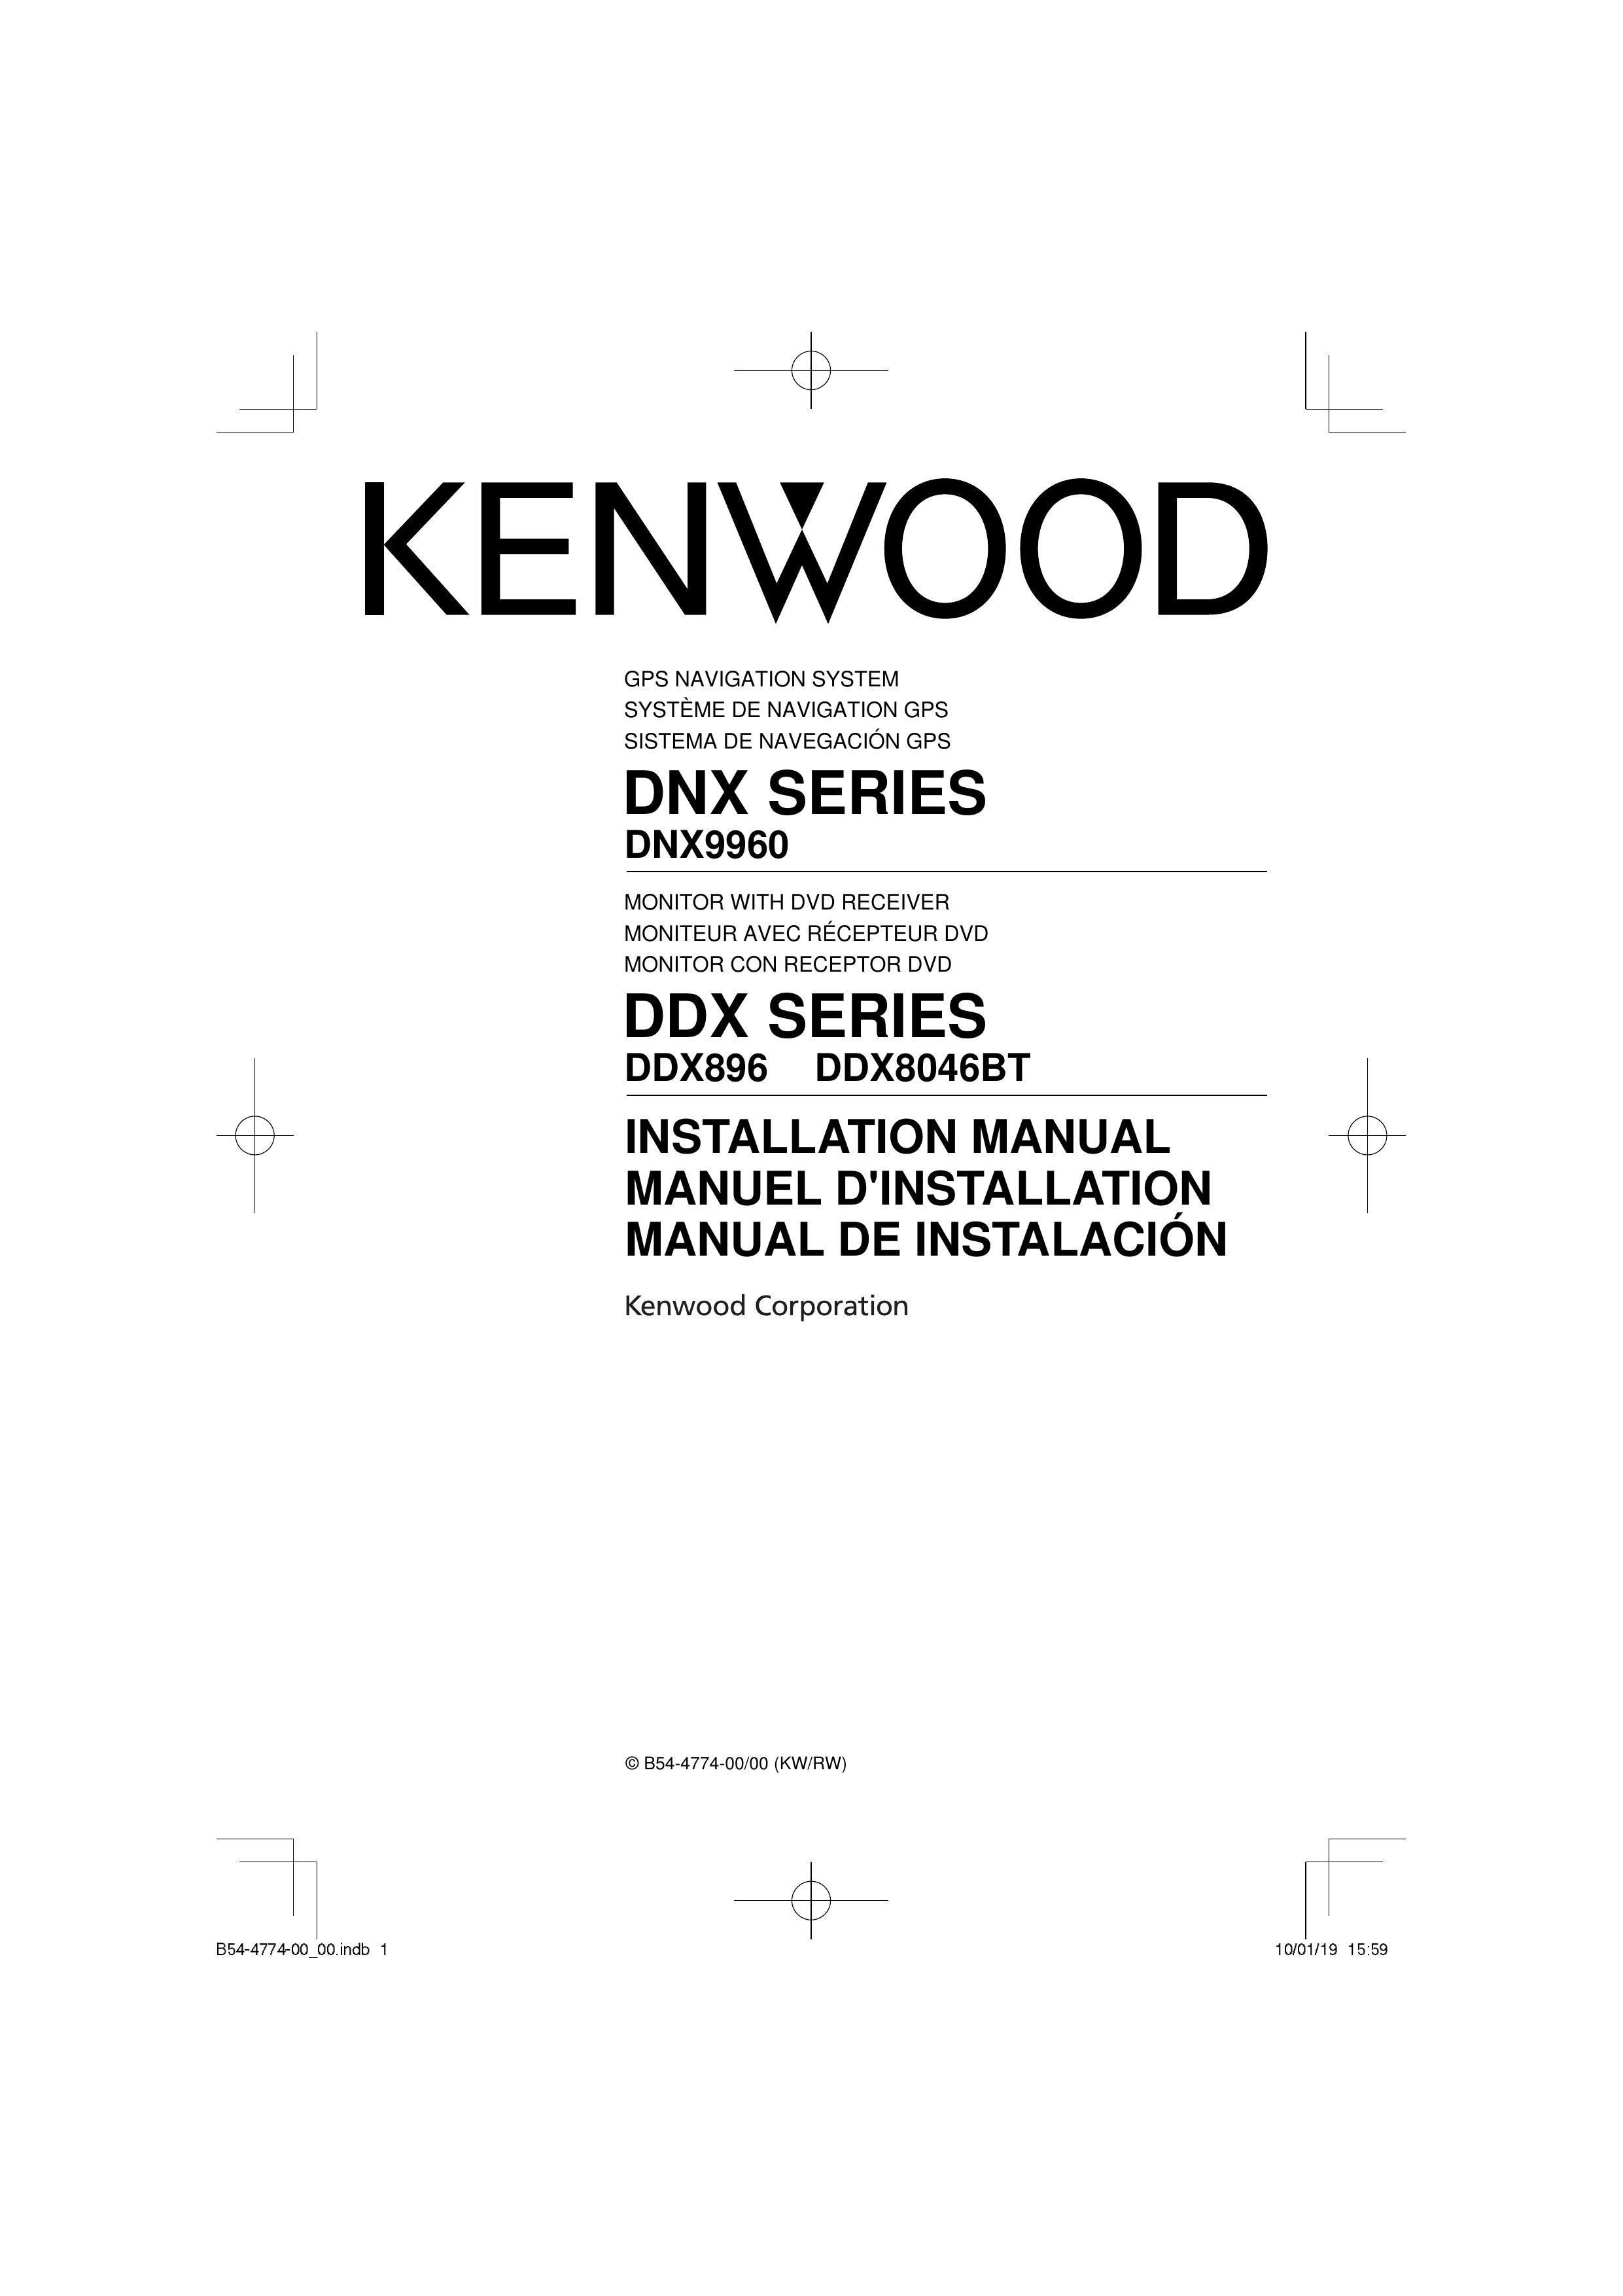 Kenwood DDX896 Blood Glucose Meter User Manual